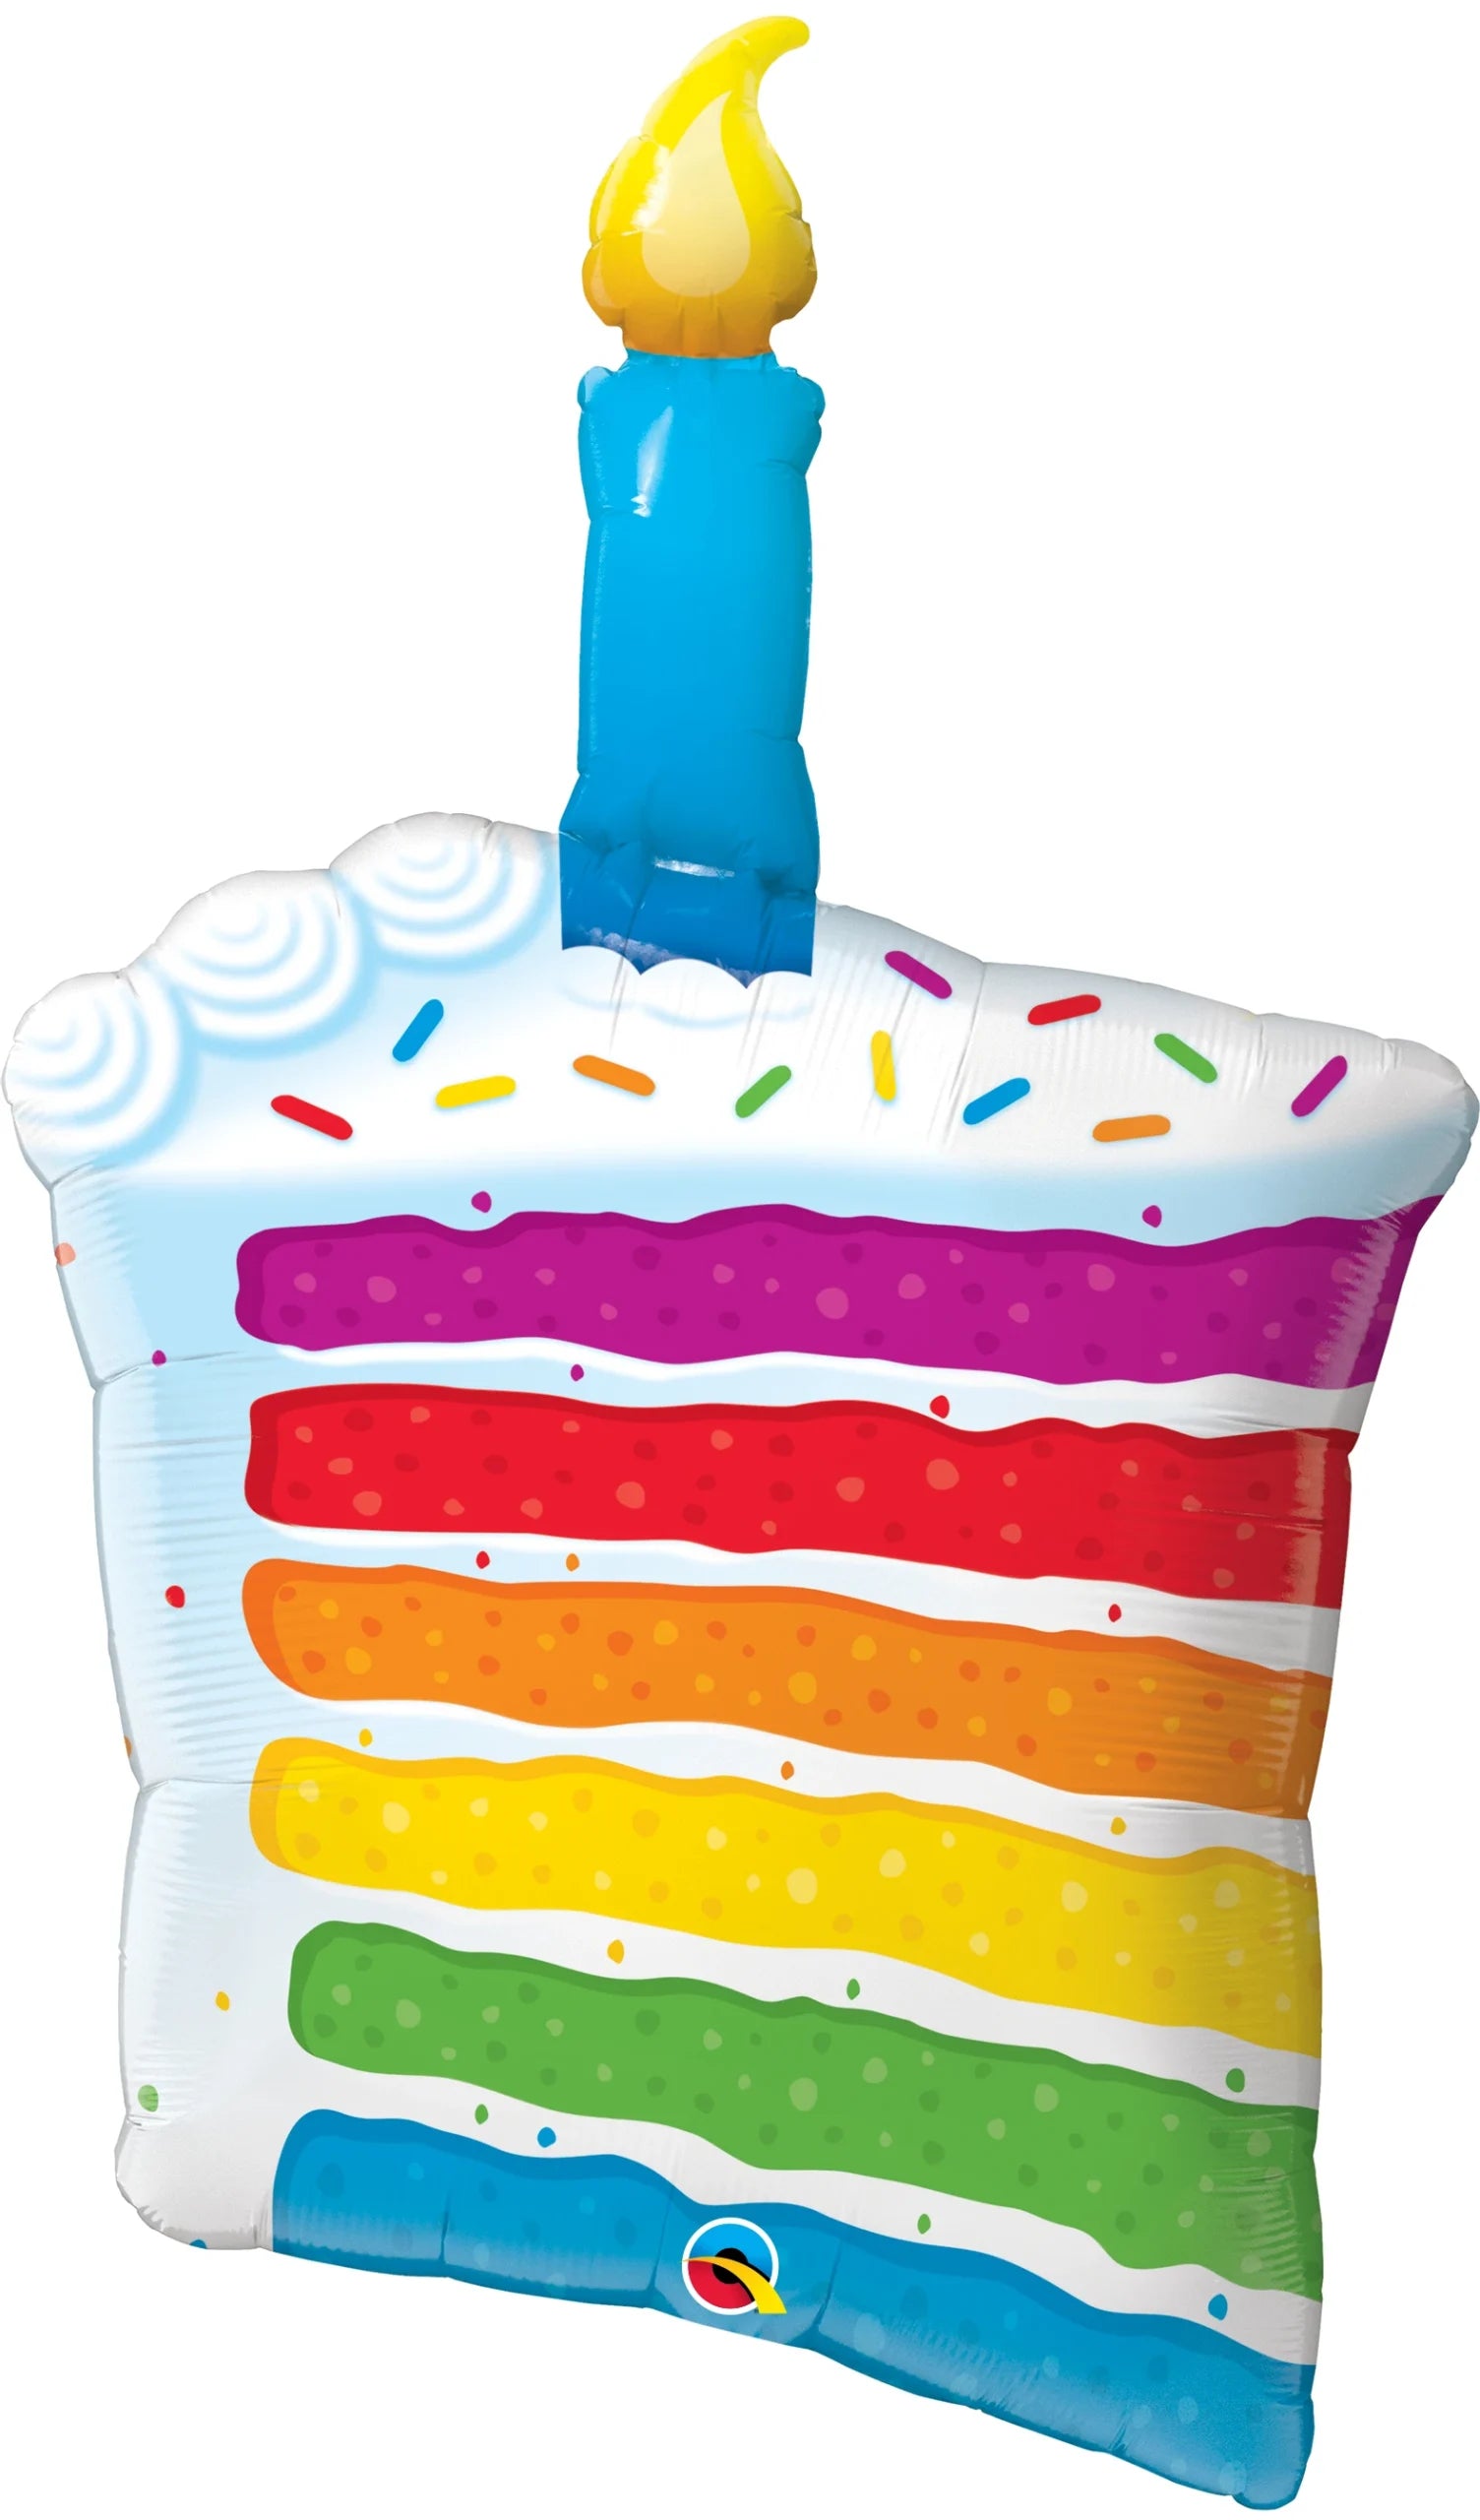 Colorful birthday cake slice shape mylar